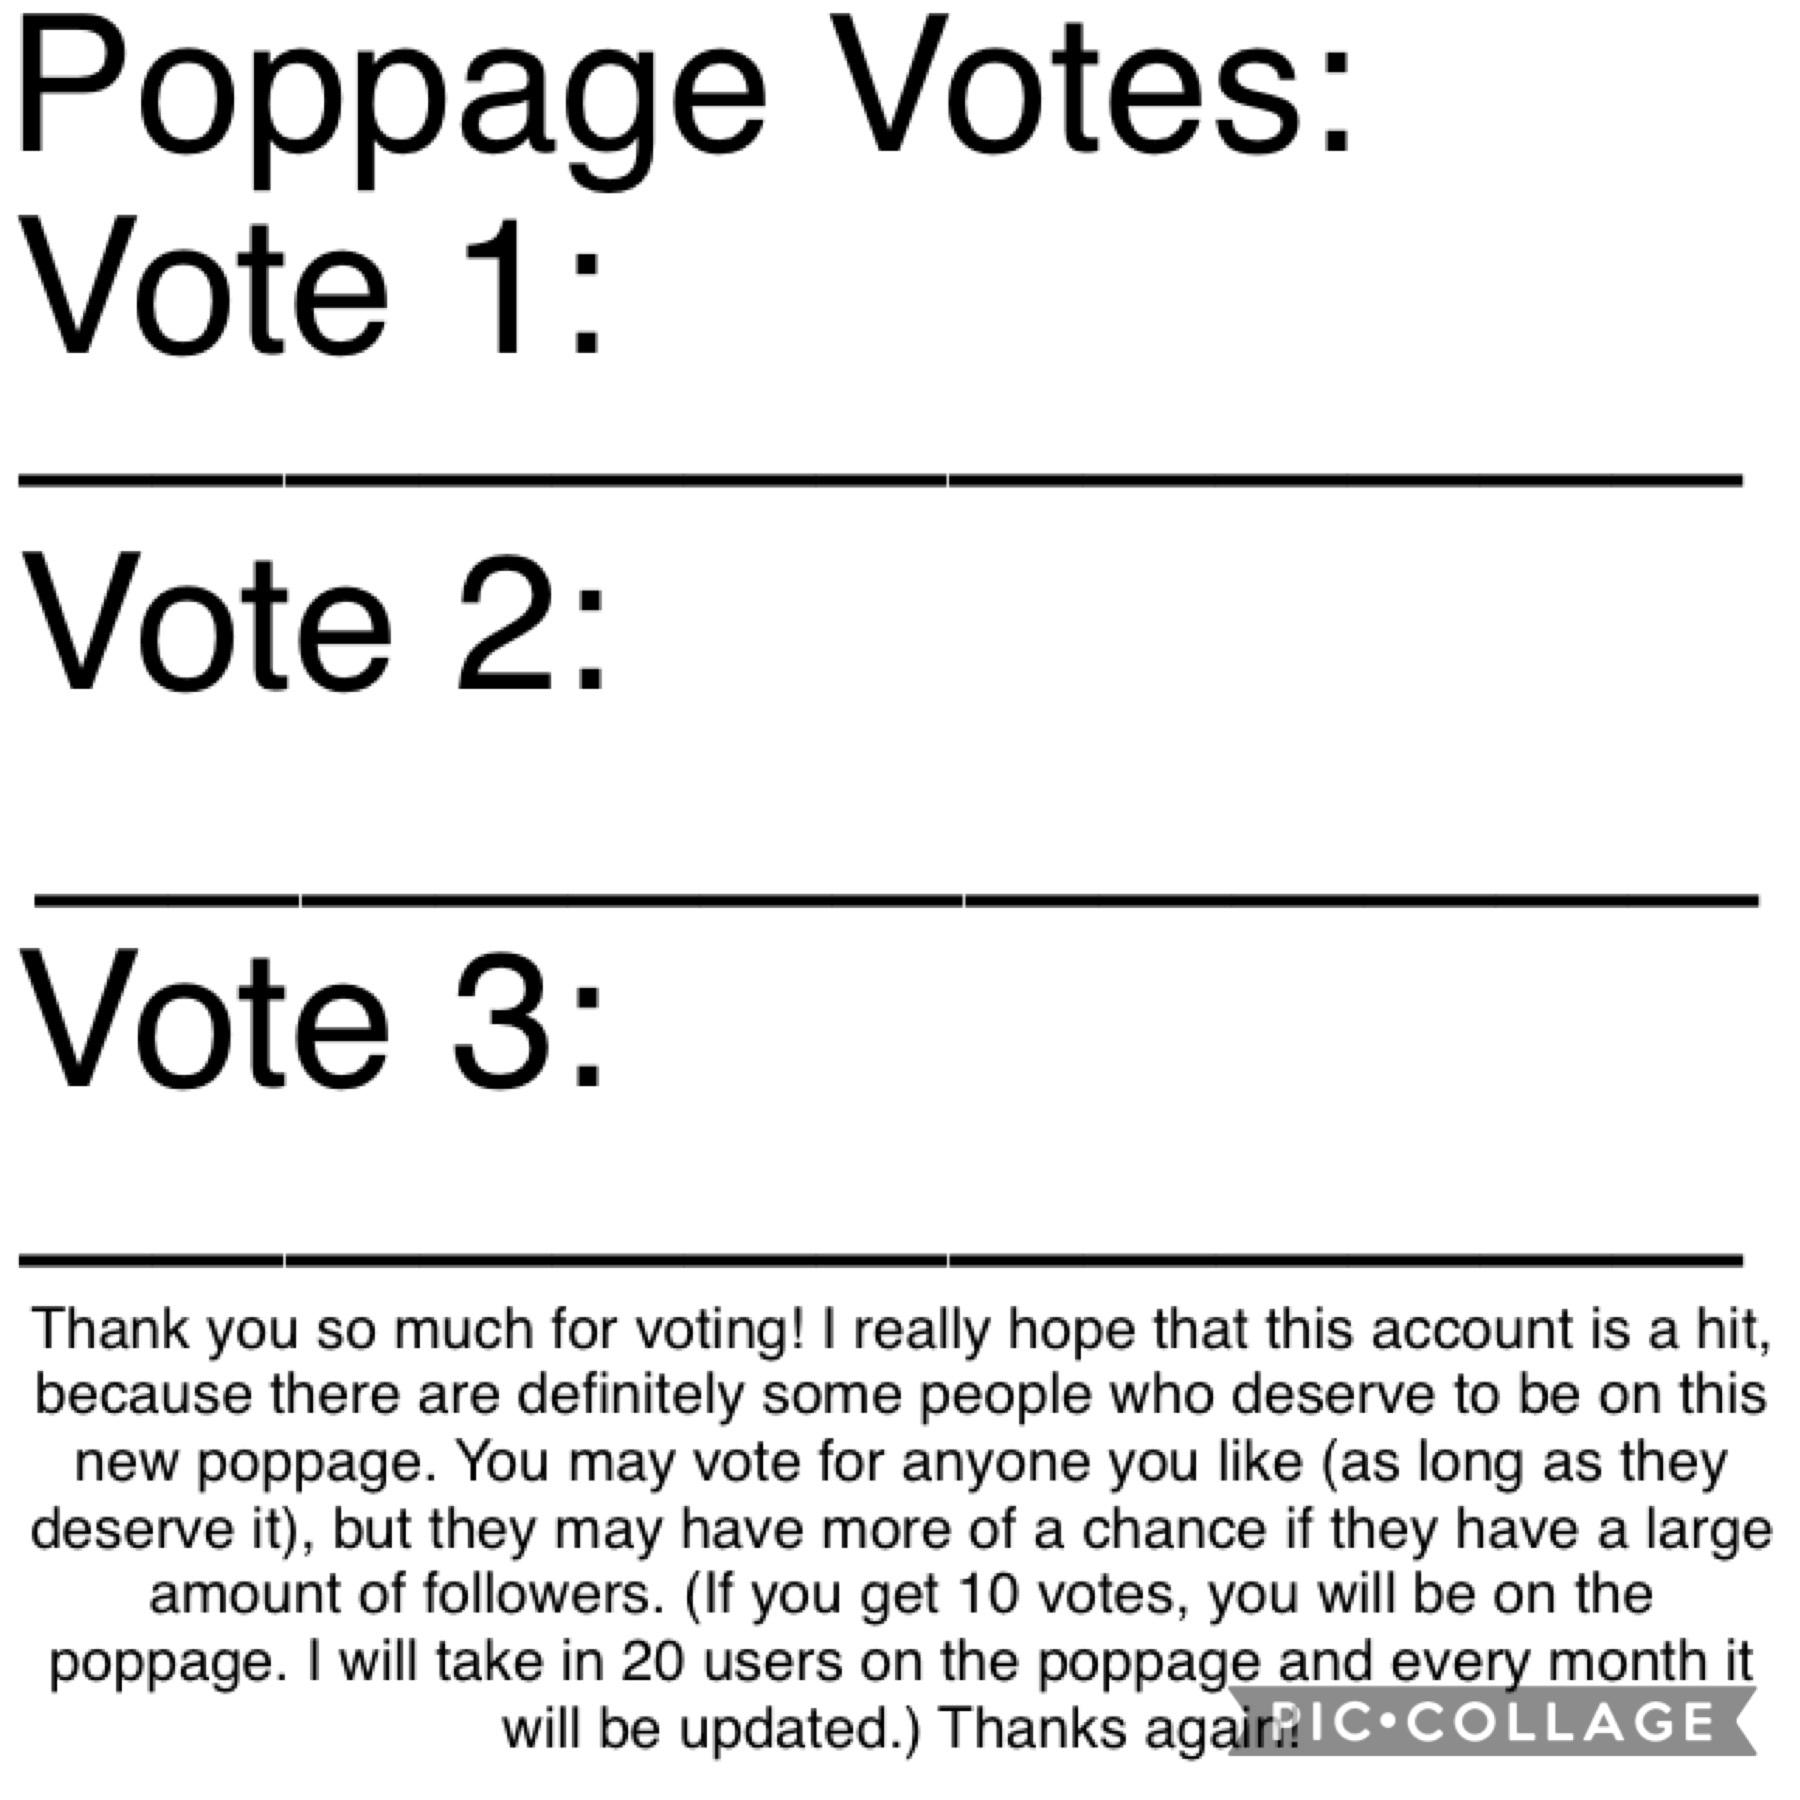 POPPAGE VOTES PLEASE ENTER 